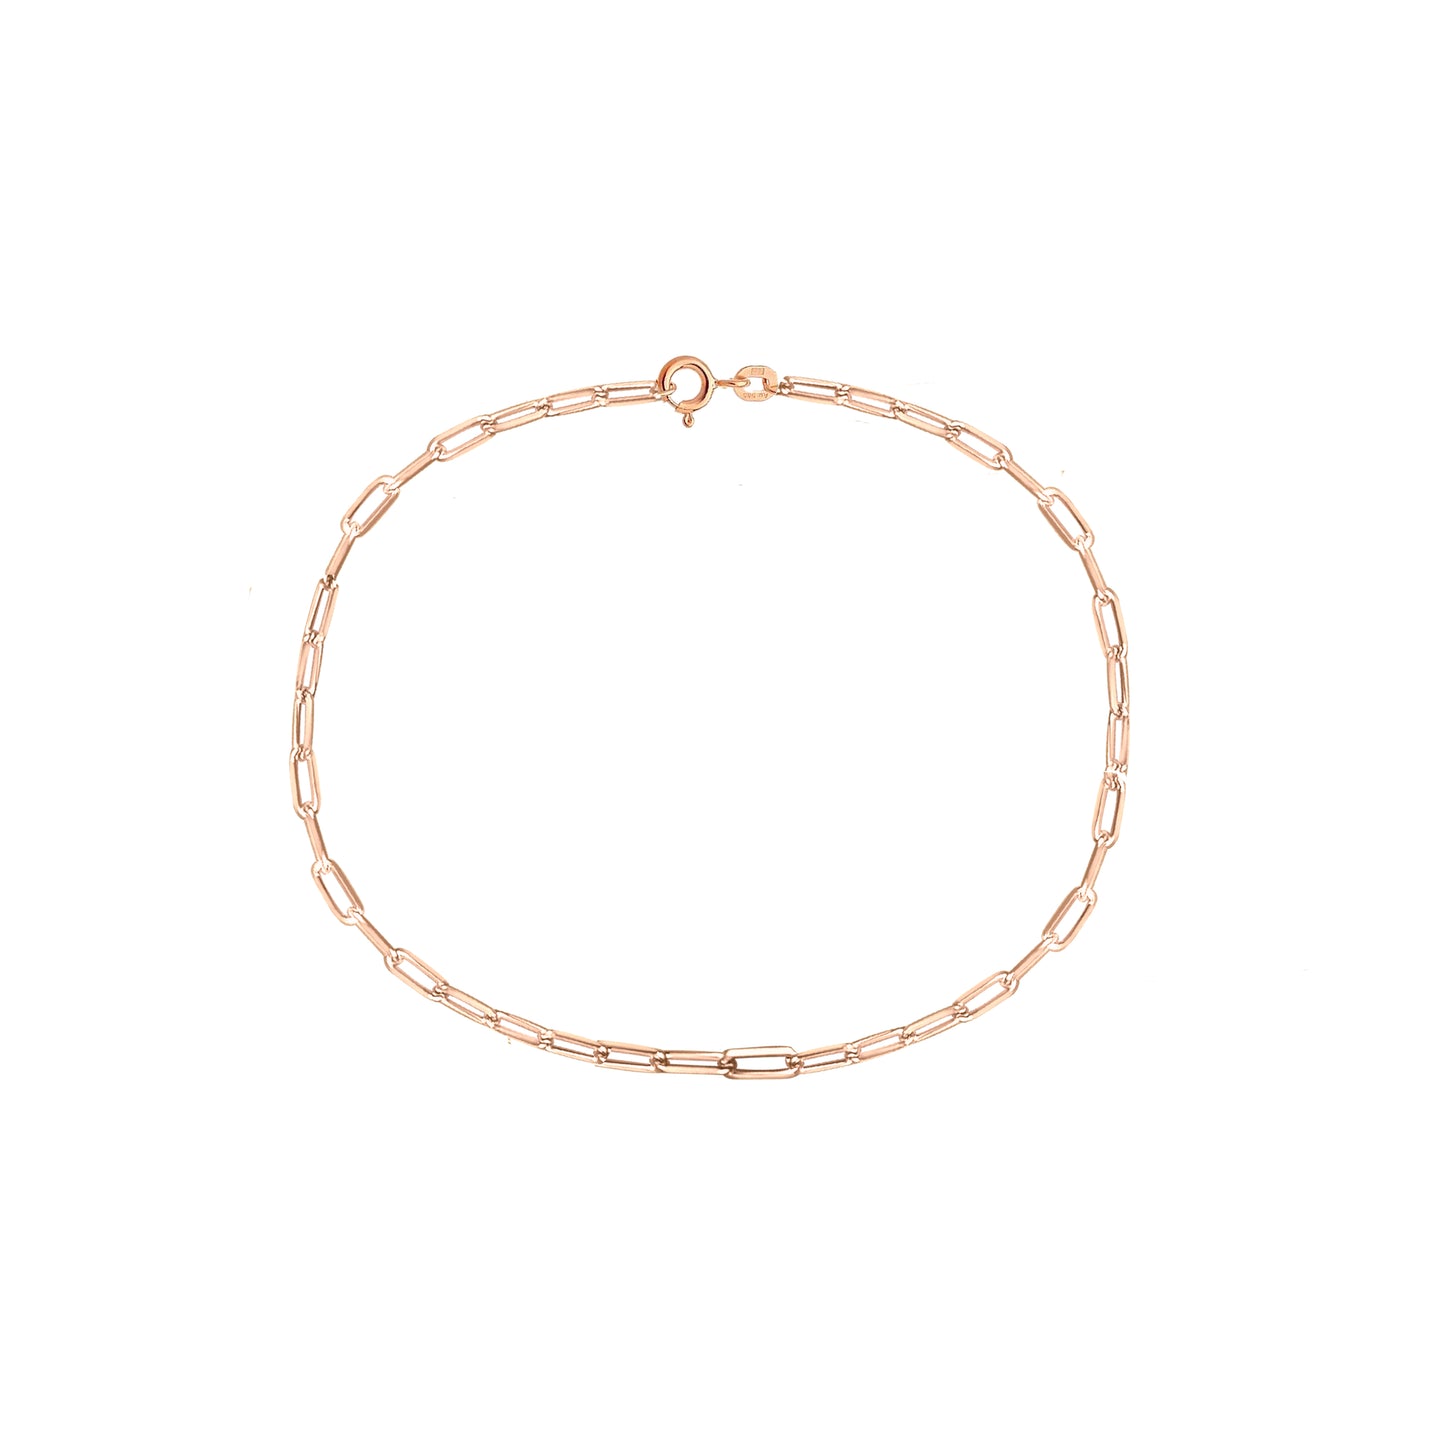 Fine Paperclip Chain Bracelet in Solid 9k Rose Gold